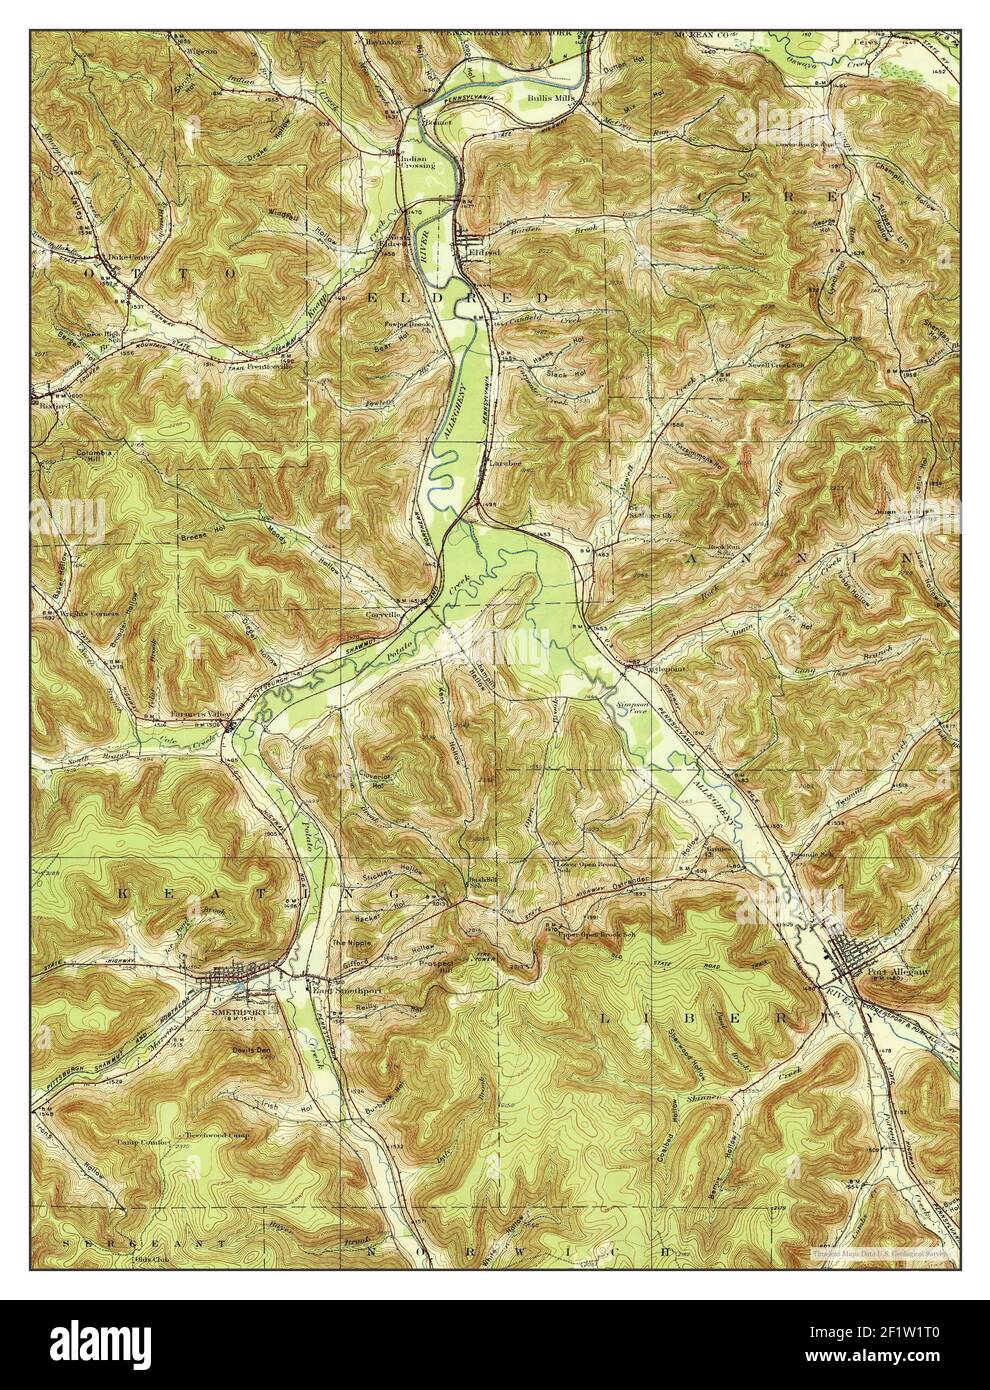 Smethport, Pennsylvania, map 1937, 1:62500, United States of America by Timeless Maps, data U.S. Geological Survey Stock Photo